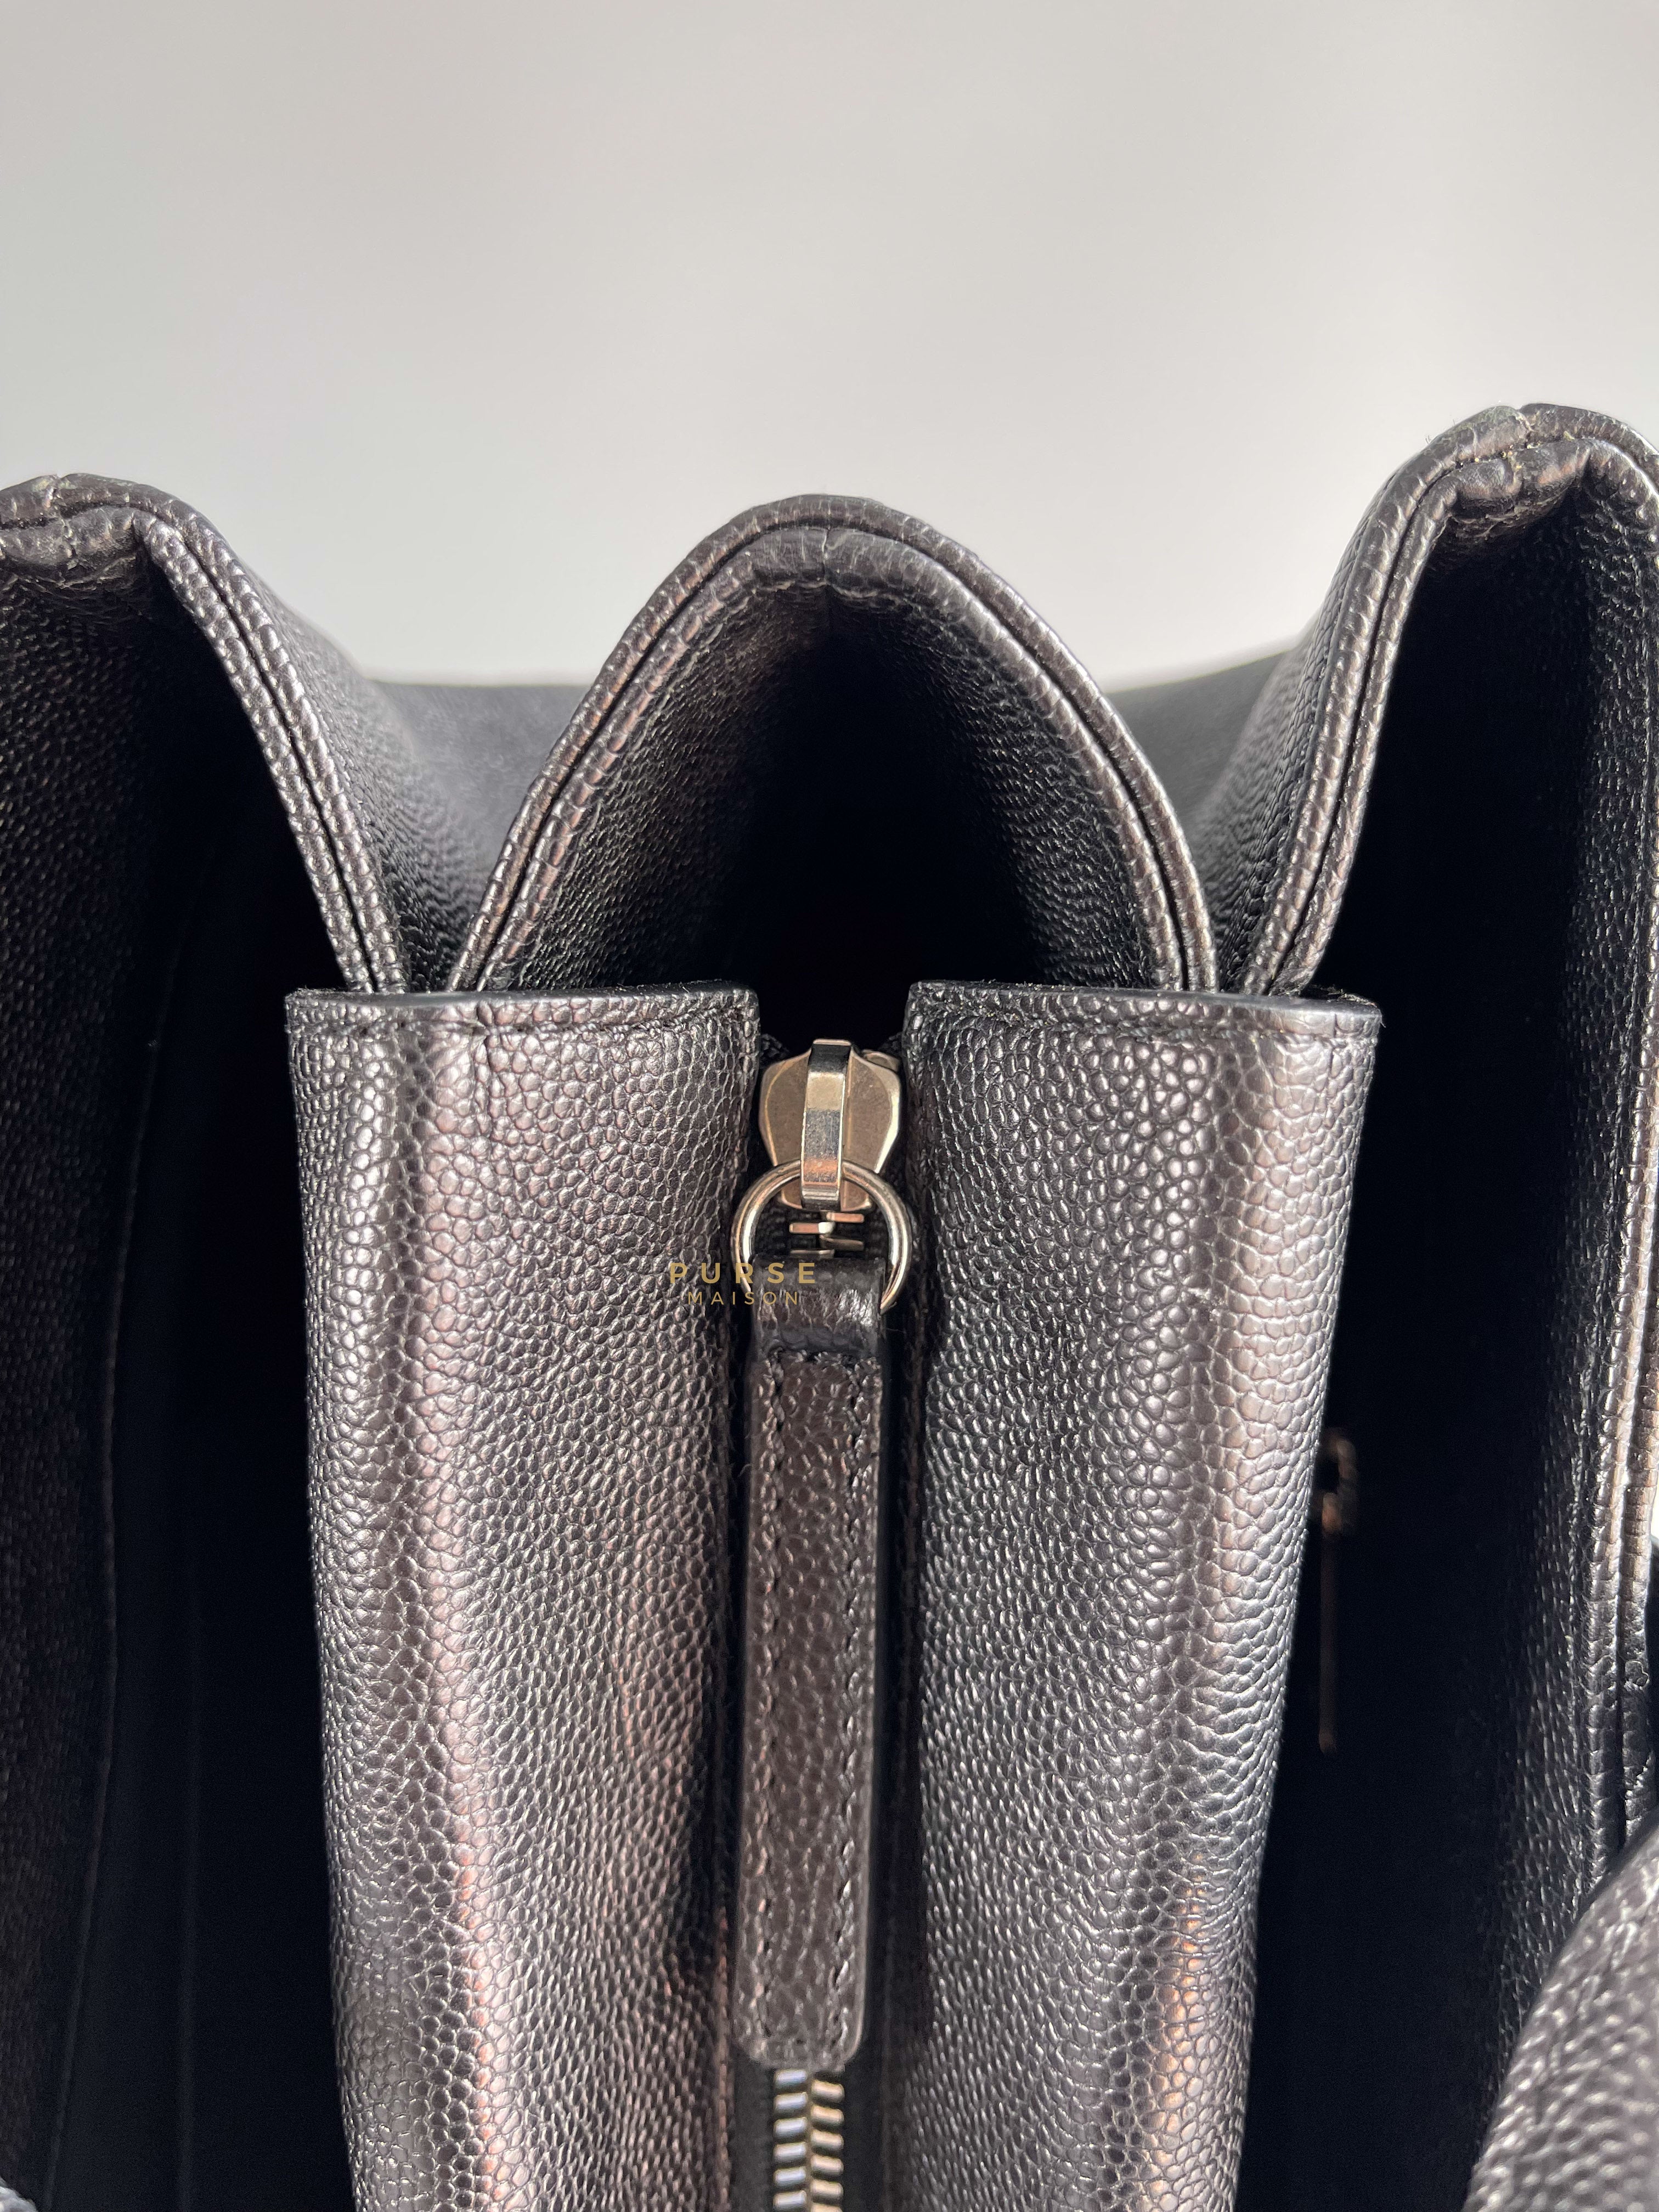 Chanel Urban Companion Top Handle in Black Caviar Canvas Tote Bag Series 25 | Purse Maison Luxury Bags Shop